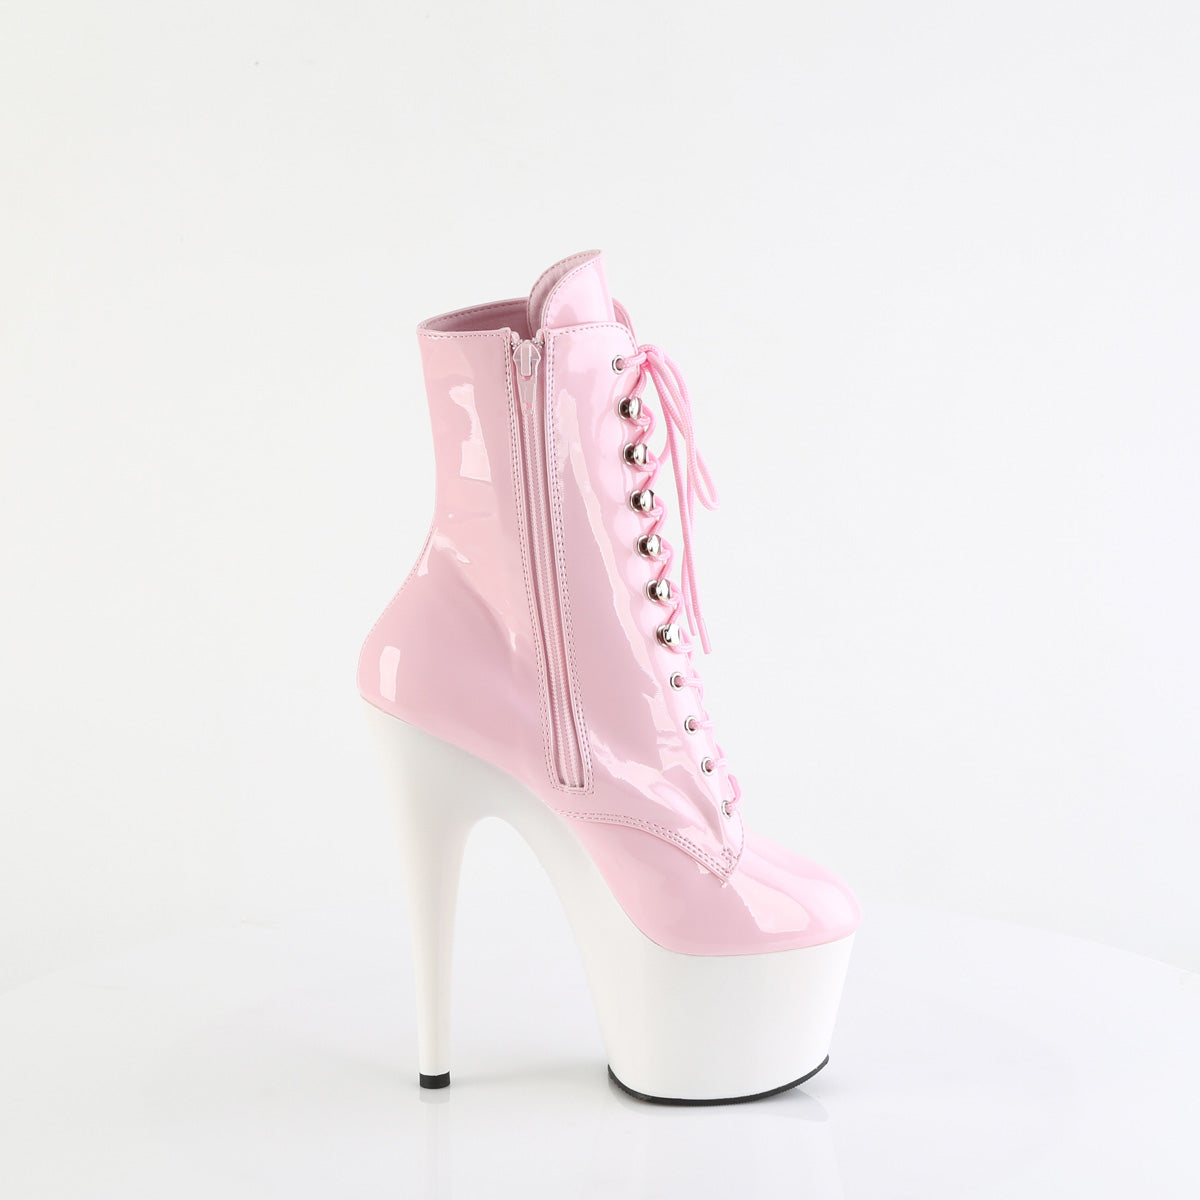 ADORE-1020 Pink & White Calf High Boots